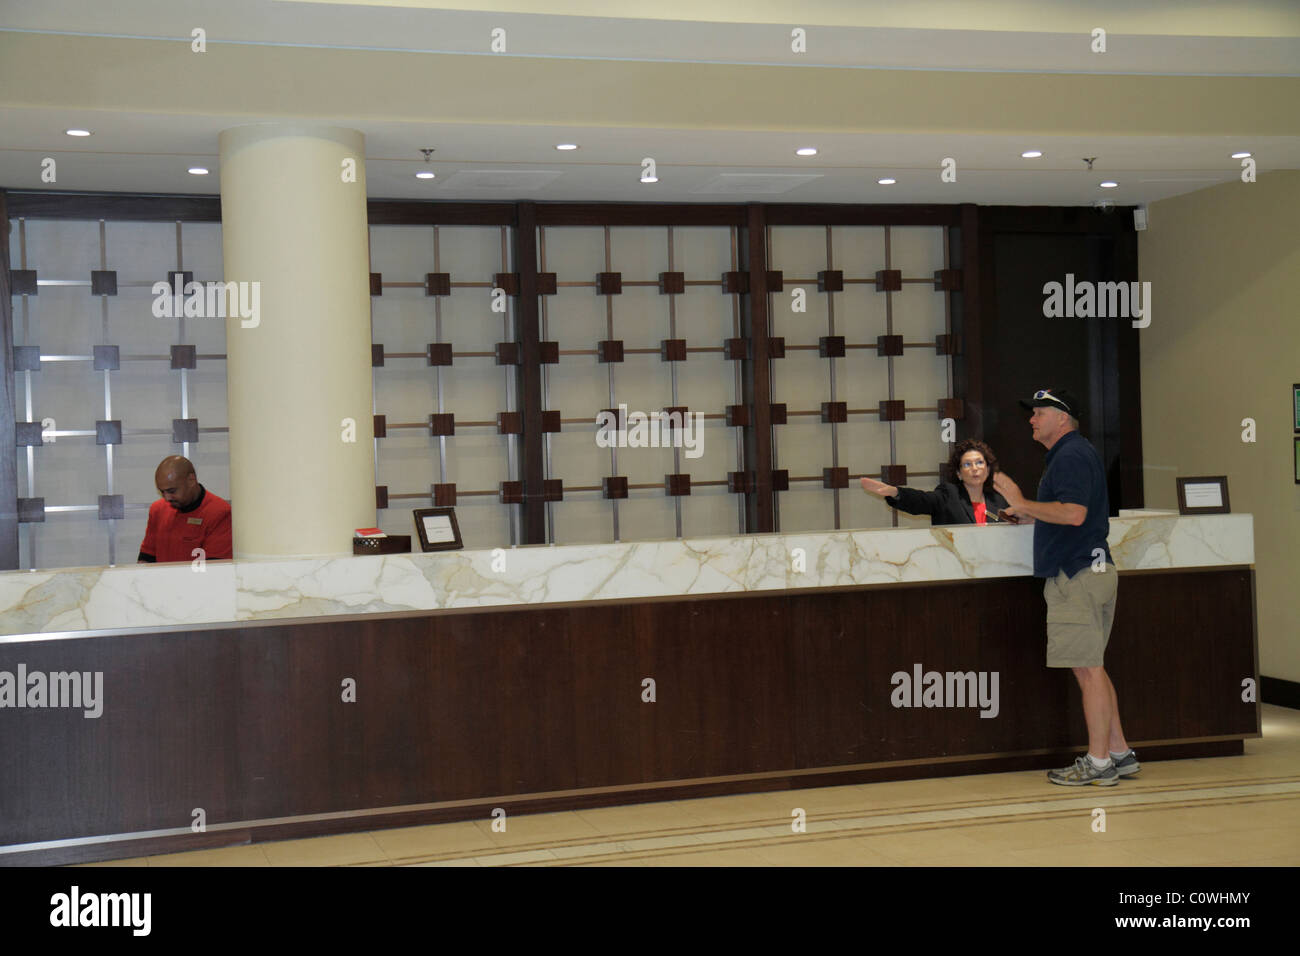 Orlando Florida Marriott Orlando Airport Hotel Lobby Front Desk